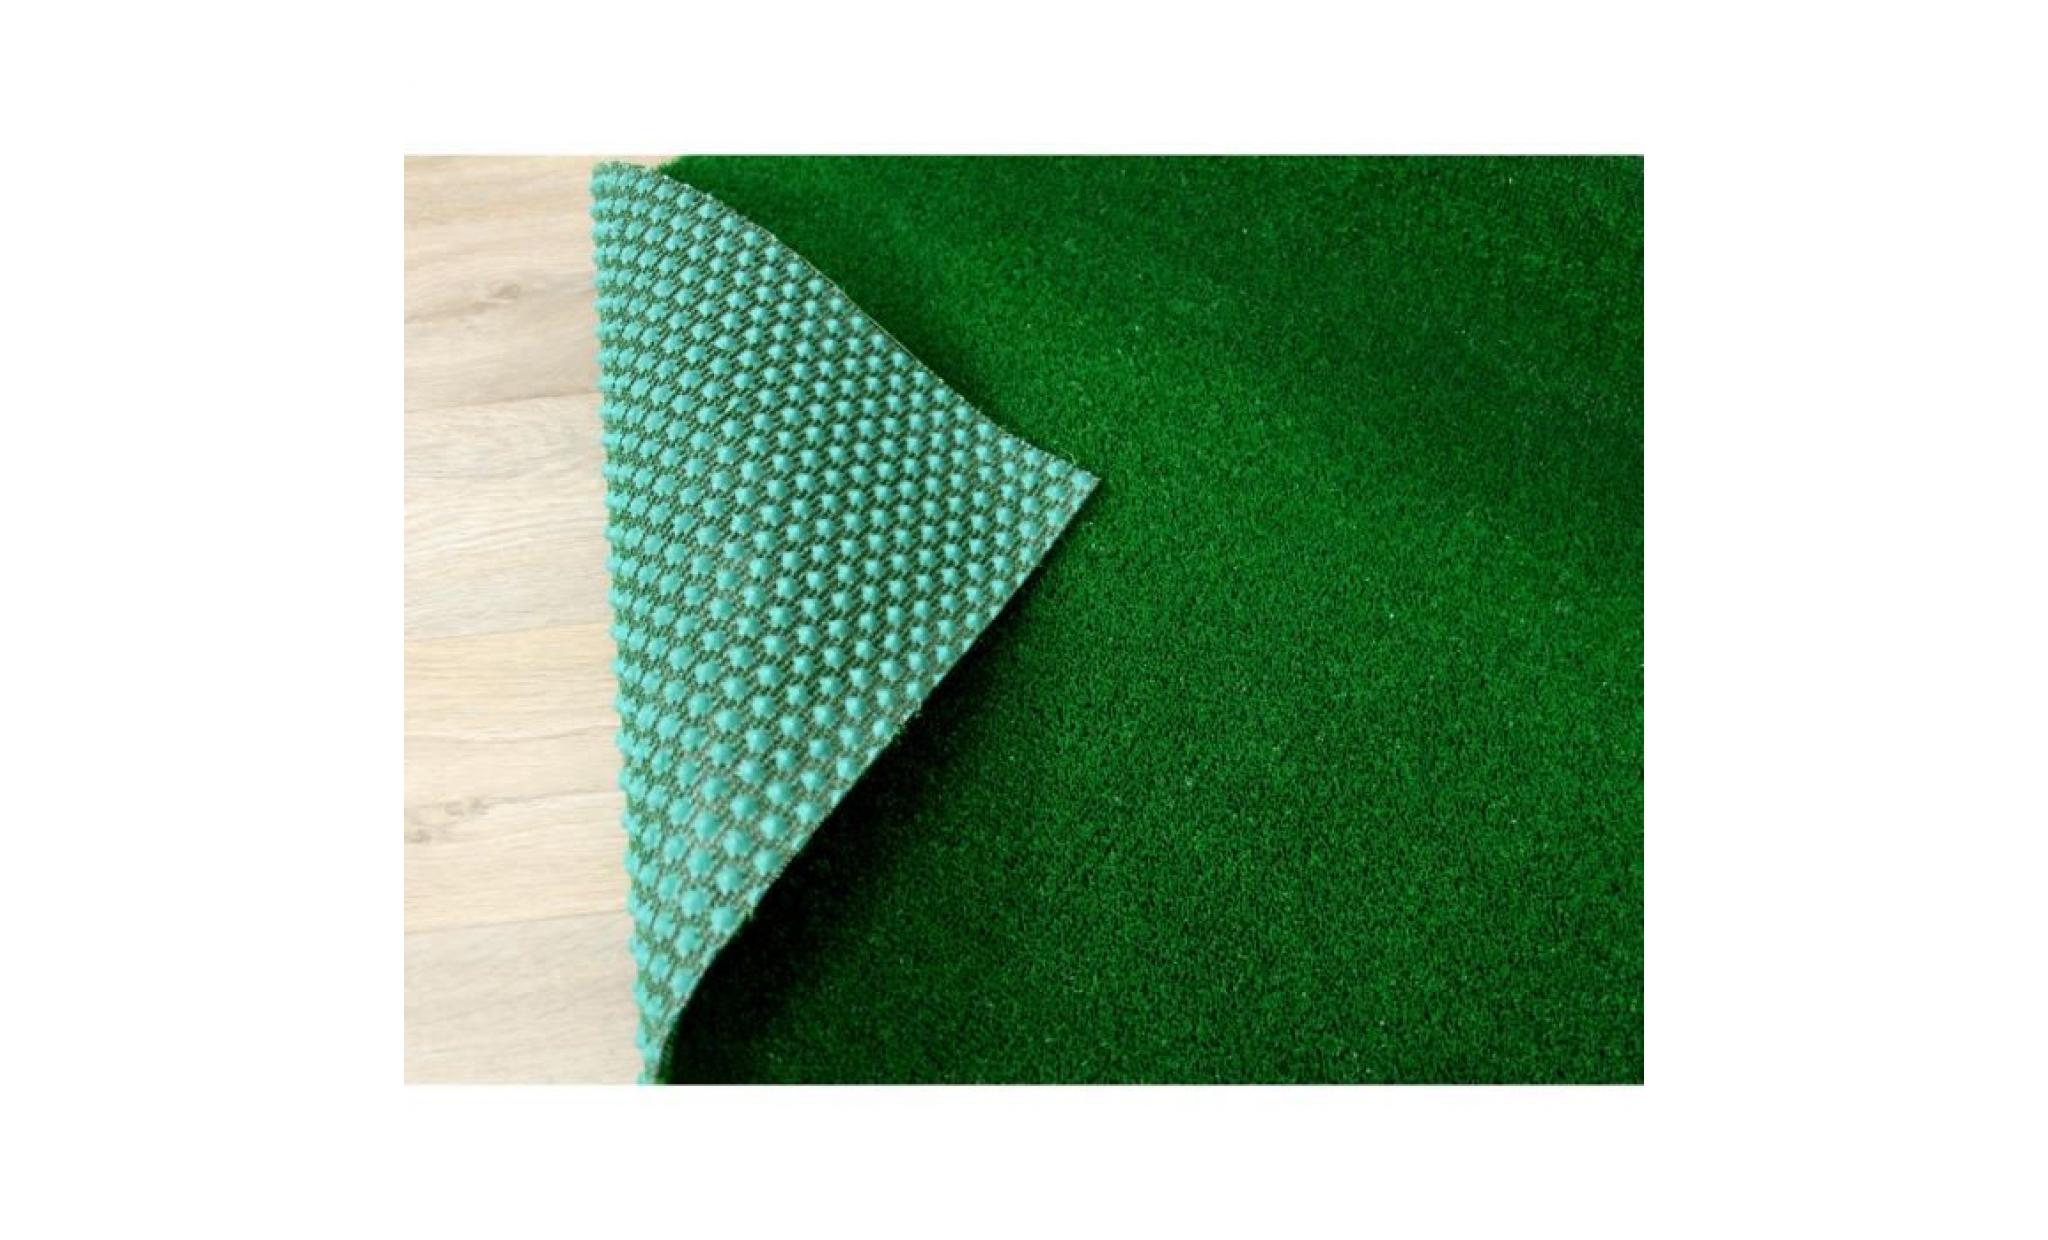 york   tapis type gazon artificiel avec nubs – pour jardin, terrasse, balcon   vert   [200x50 cm] pas cher